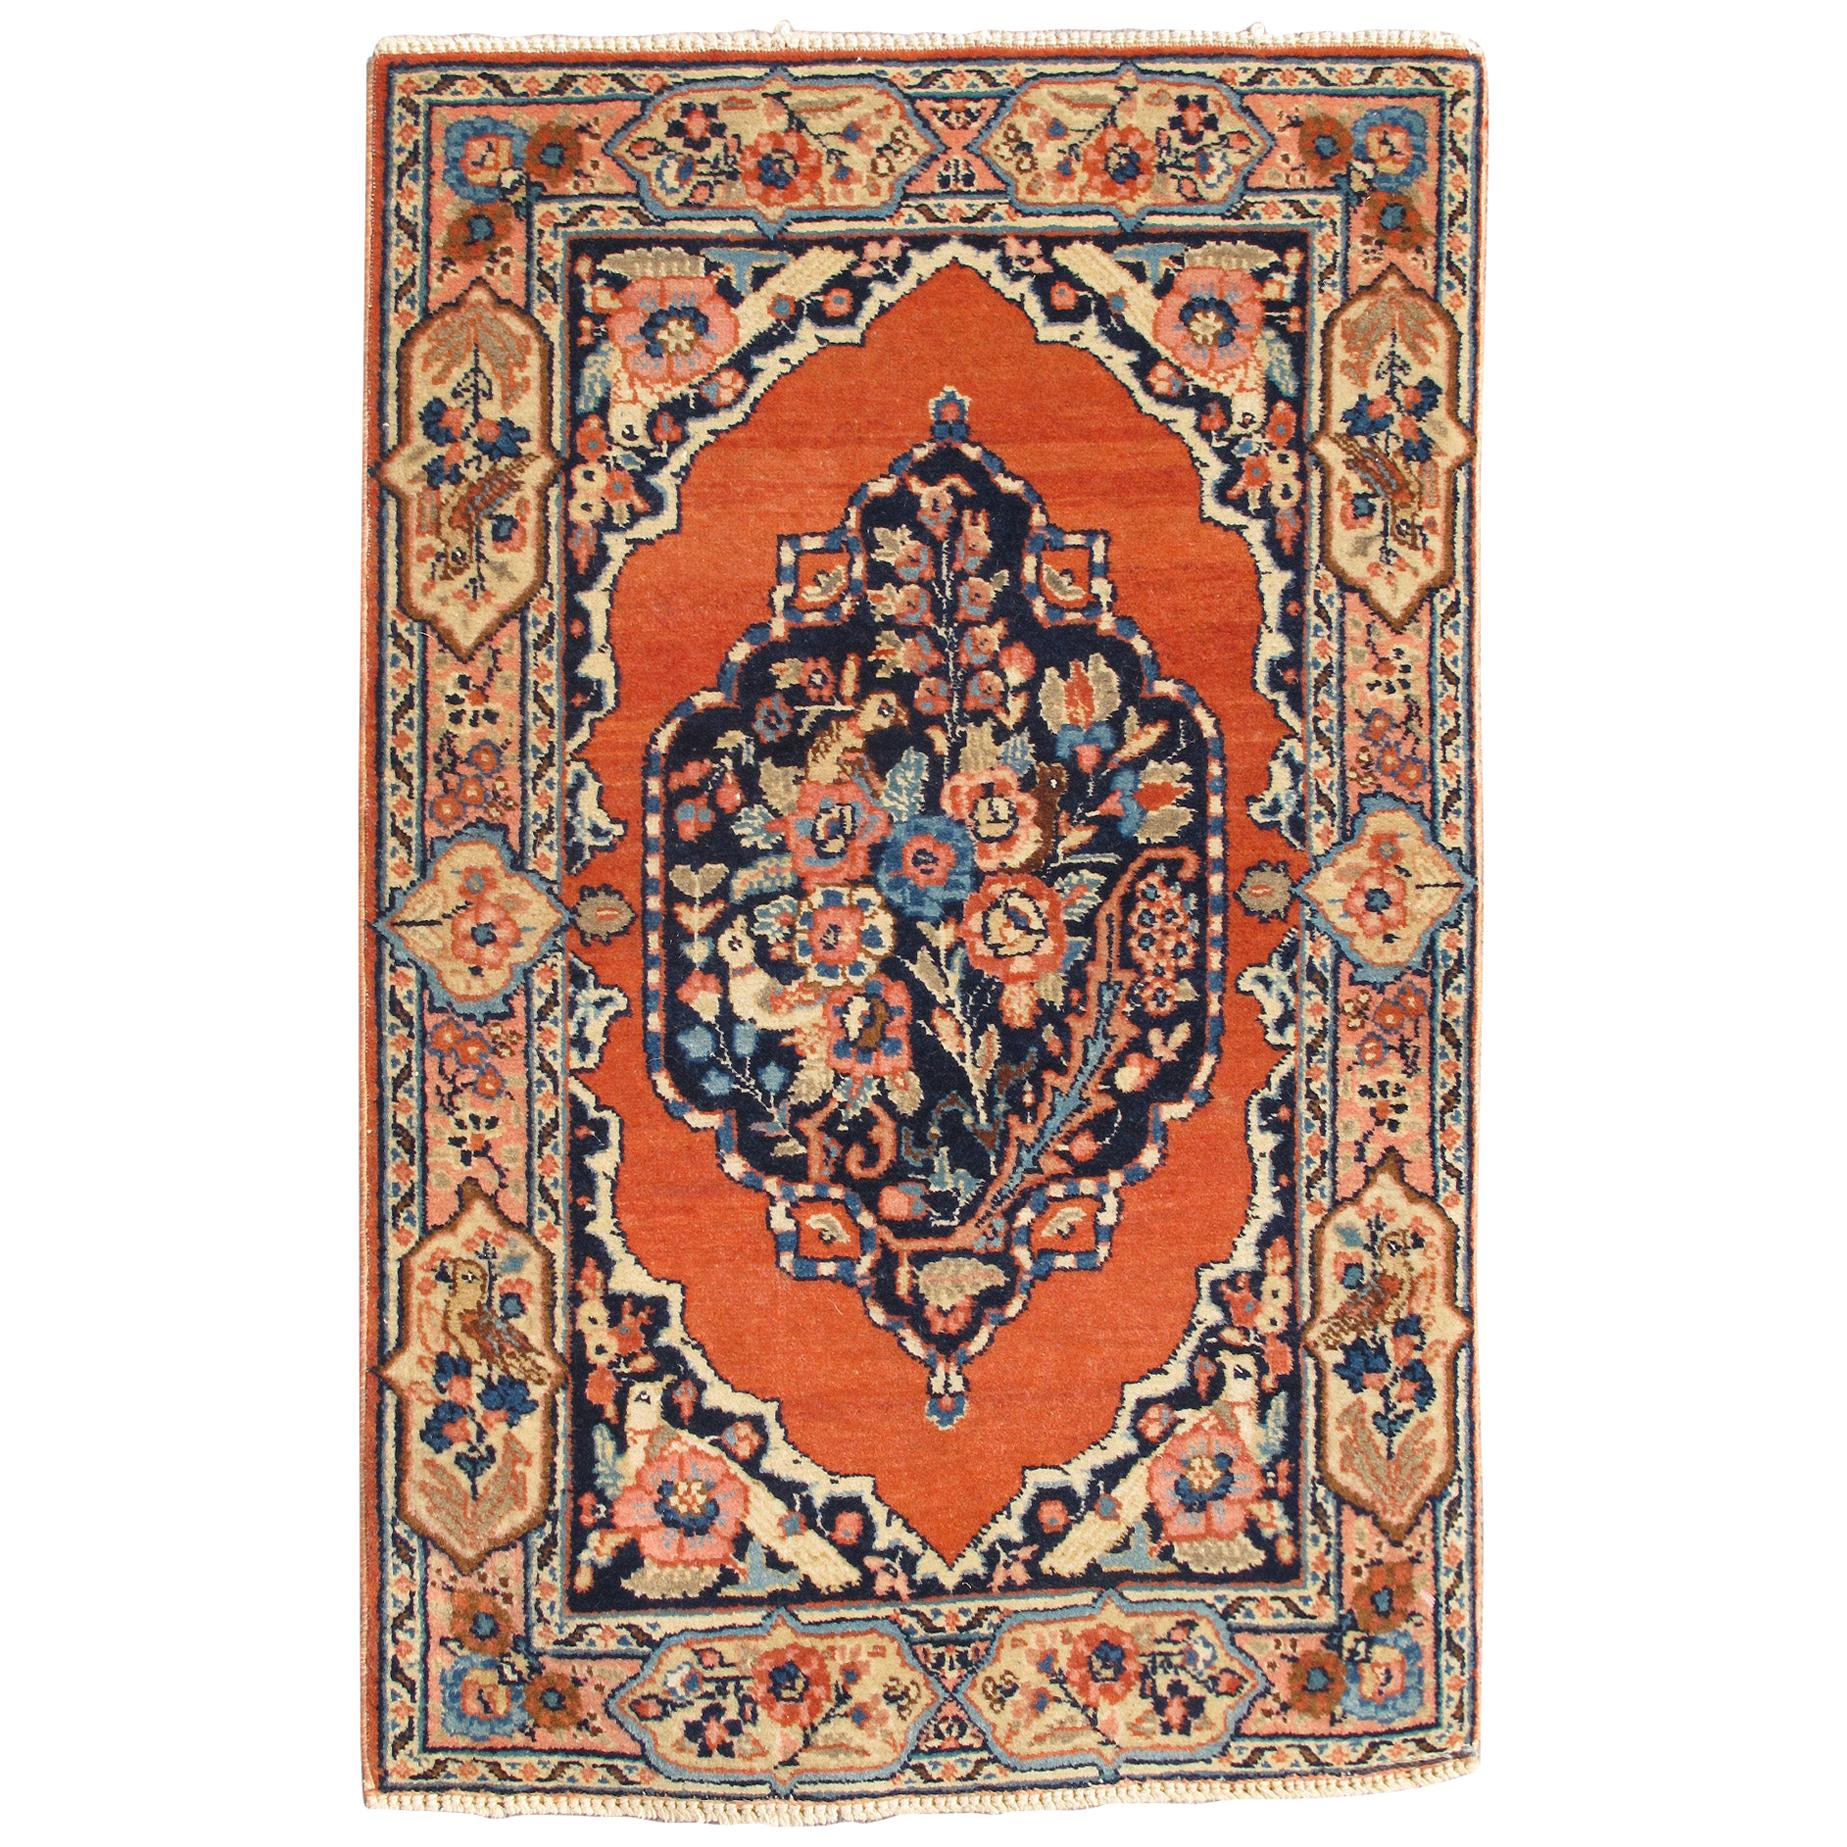 Small Antique Persian Fine Tabriz Rug with Ornate Floral Design in Burnt Orange